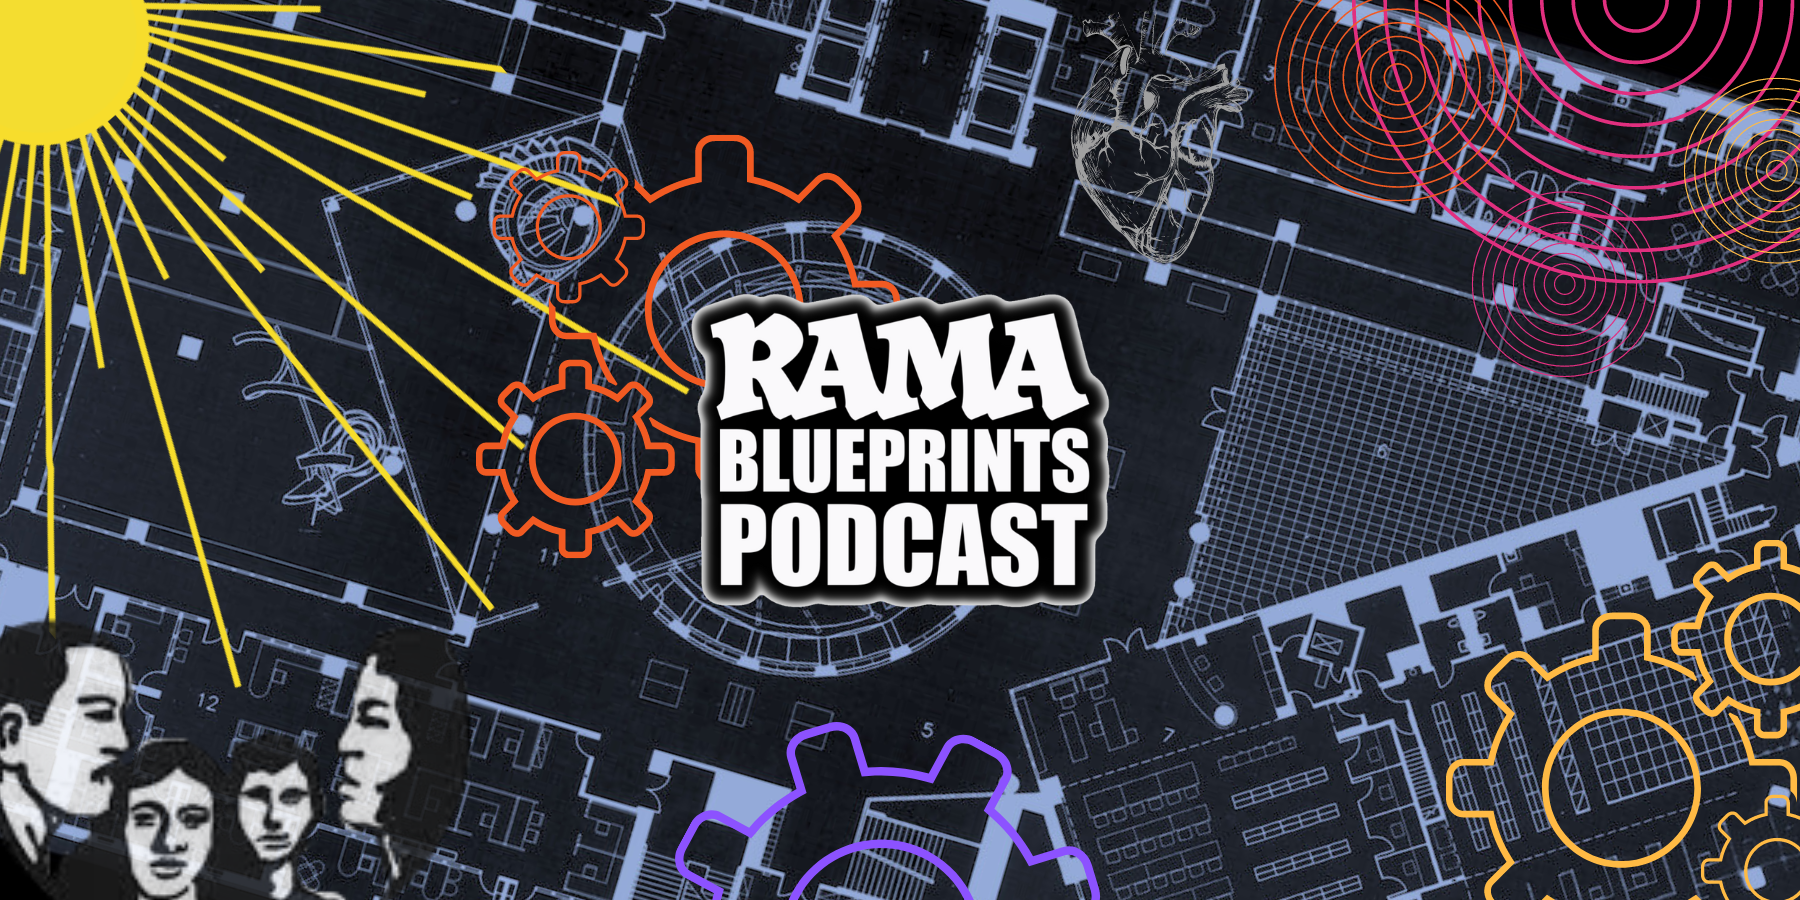 RAMA Blueprints Podcast – Slider